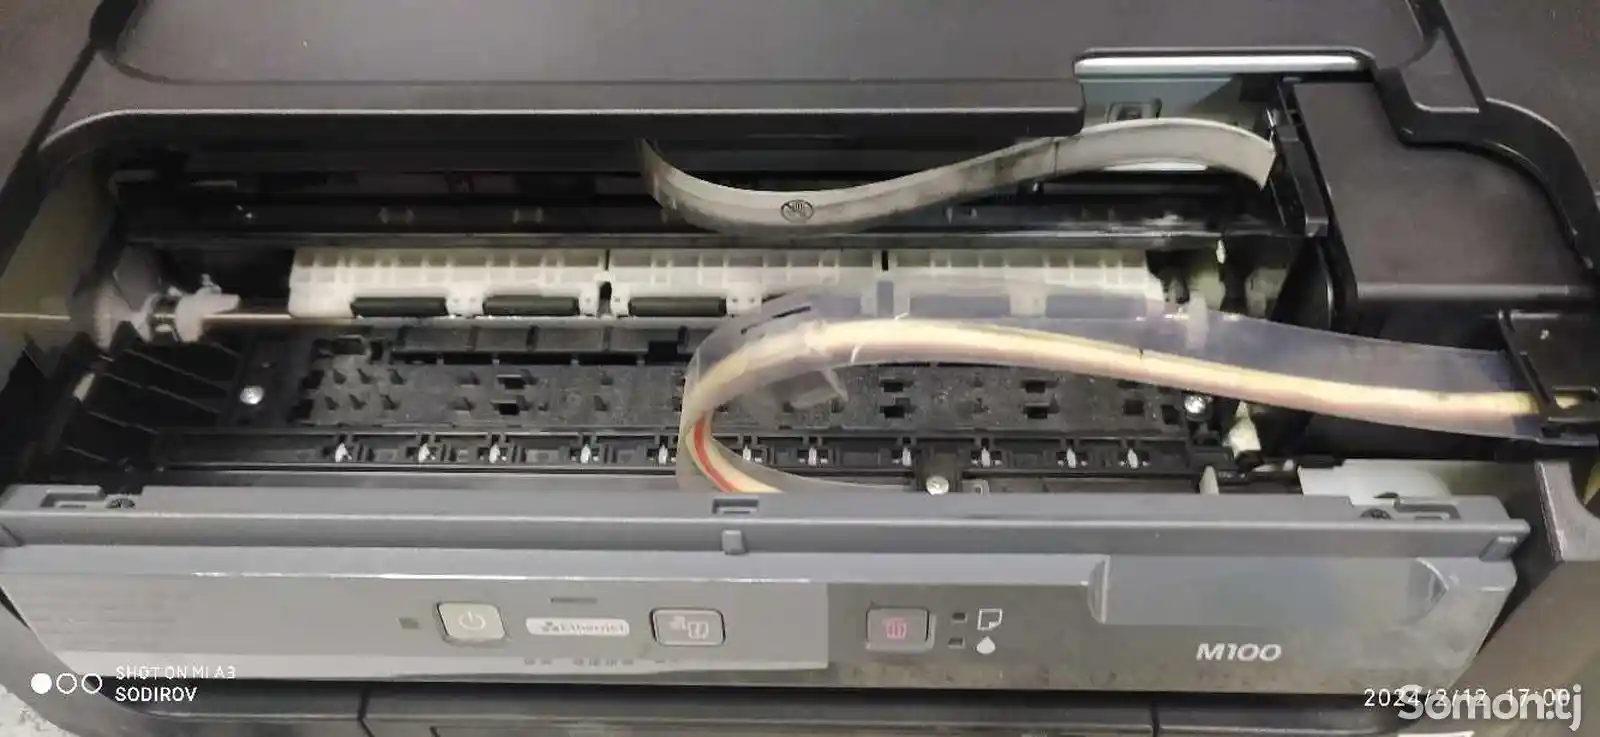 Принтер Epson M100-2